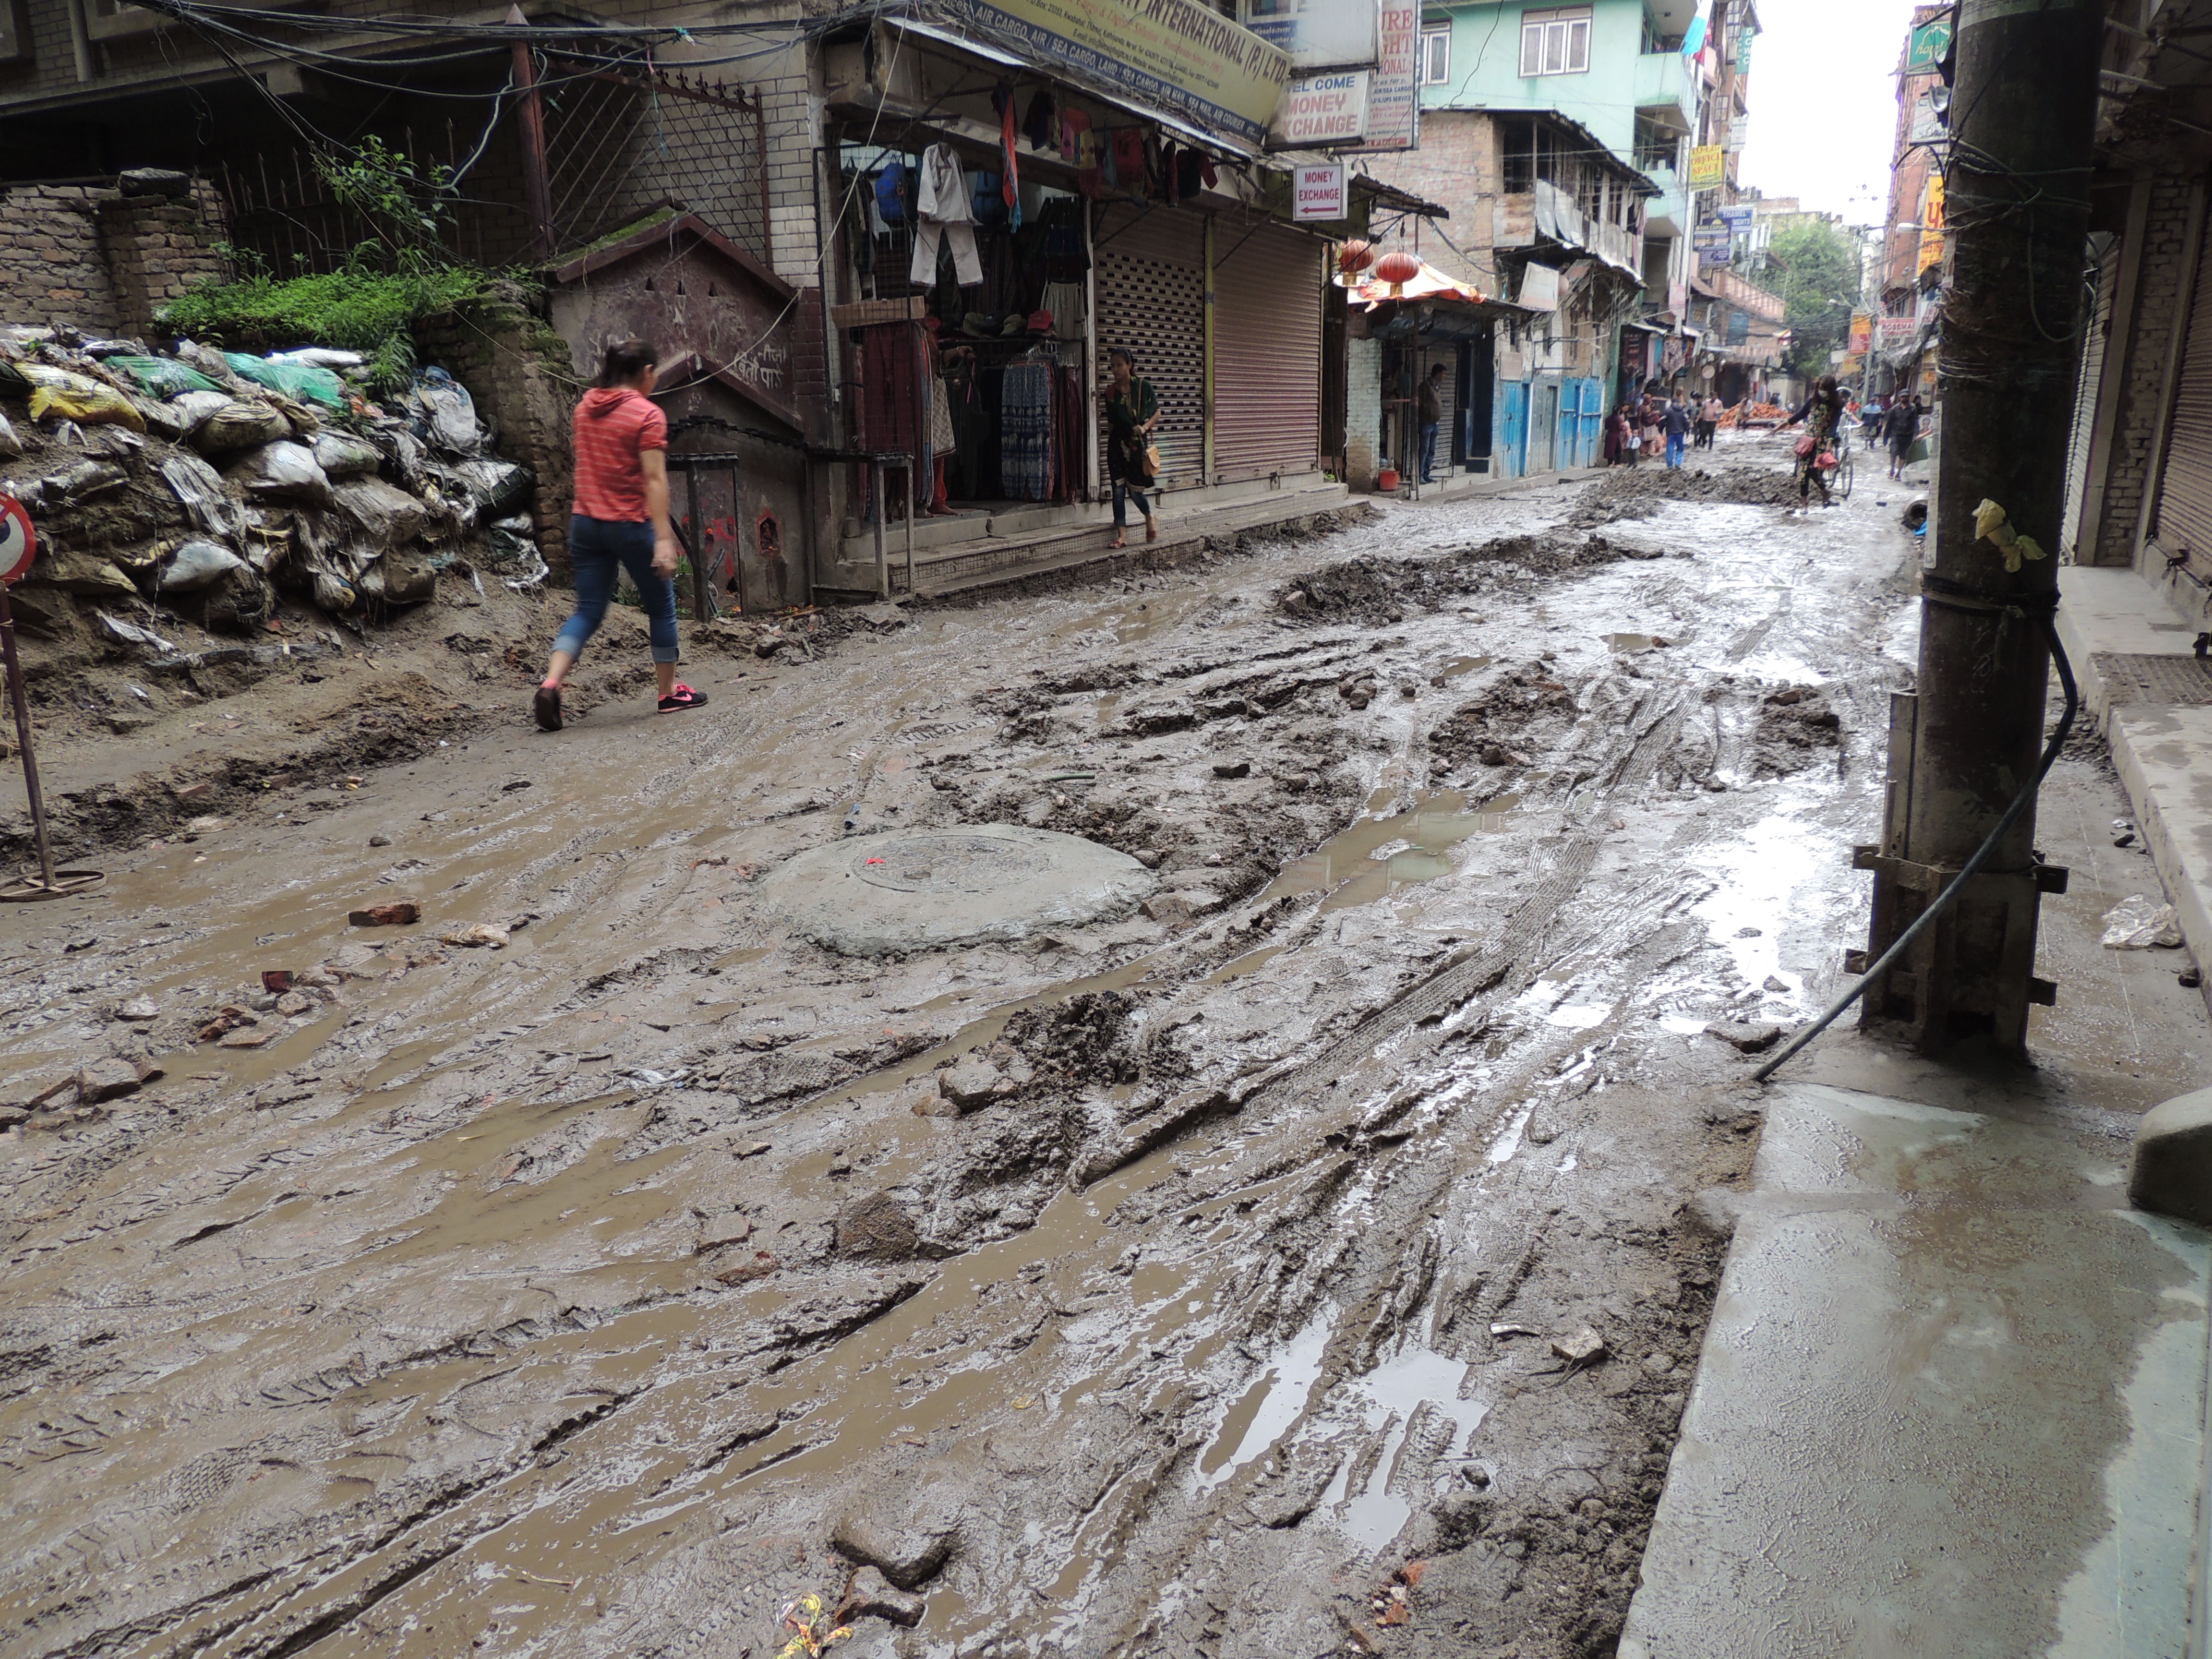 Muddy streets of Thamel in Monsoon season